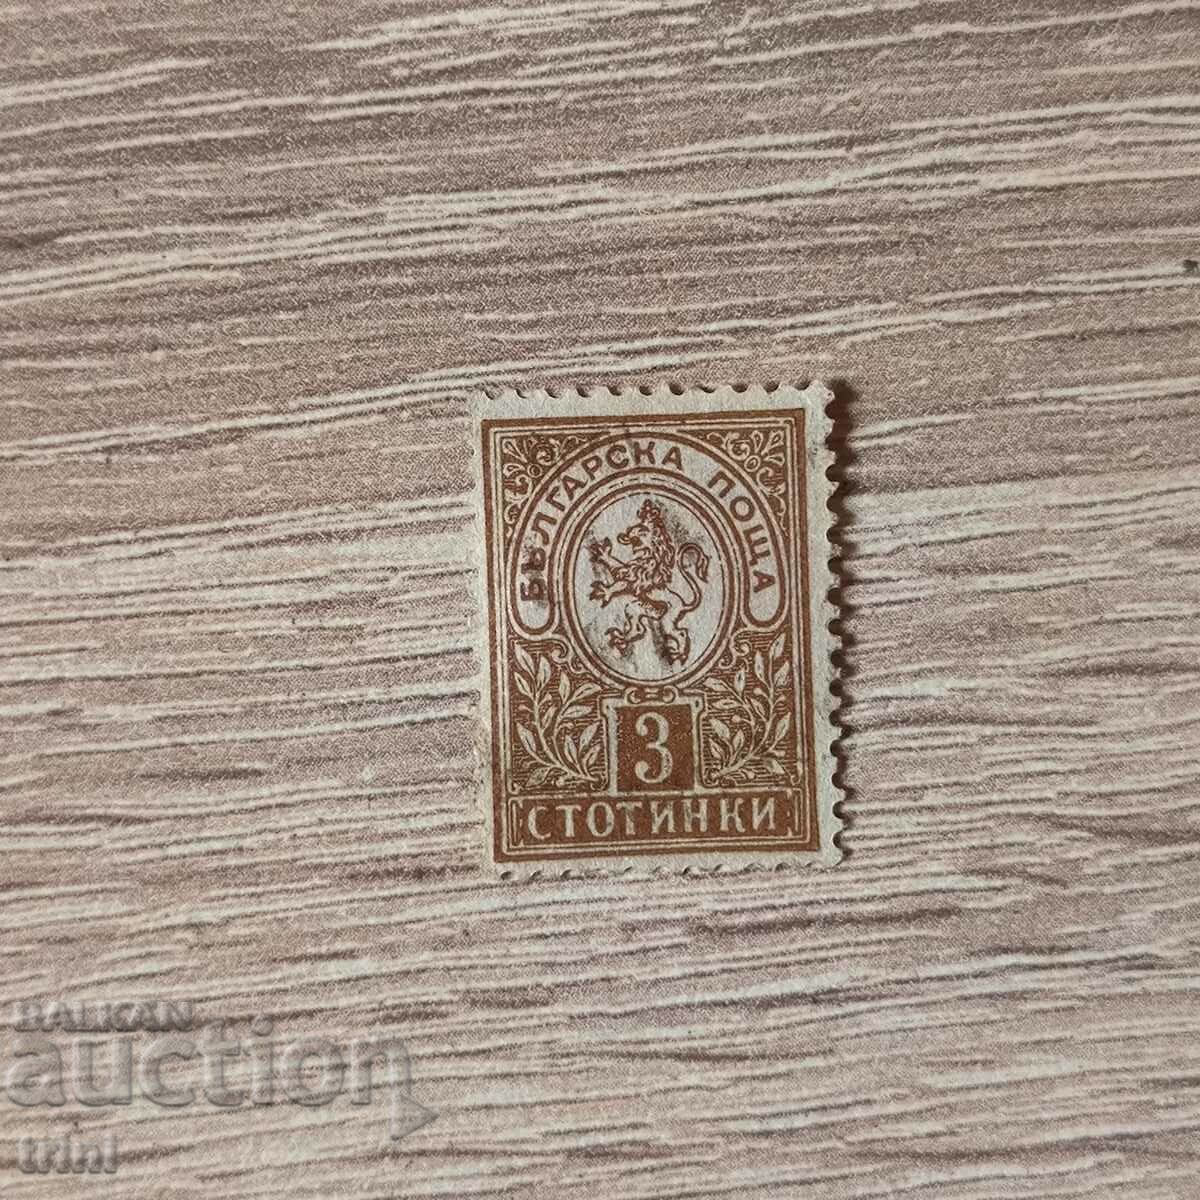 Bulgaria Leu mic 1889 3 cenți